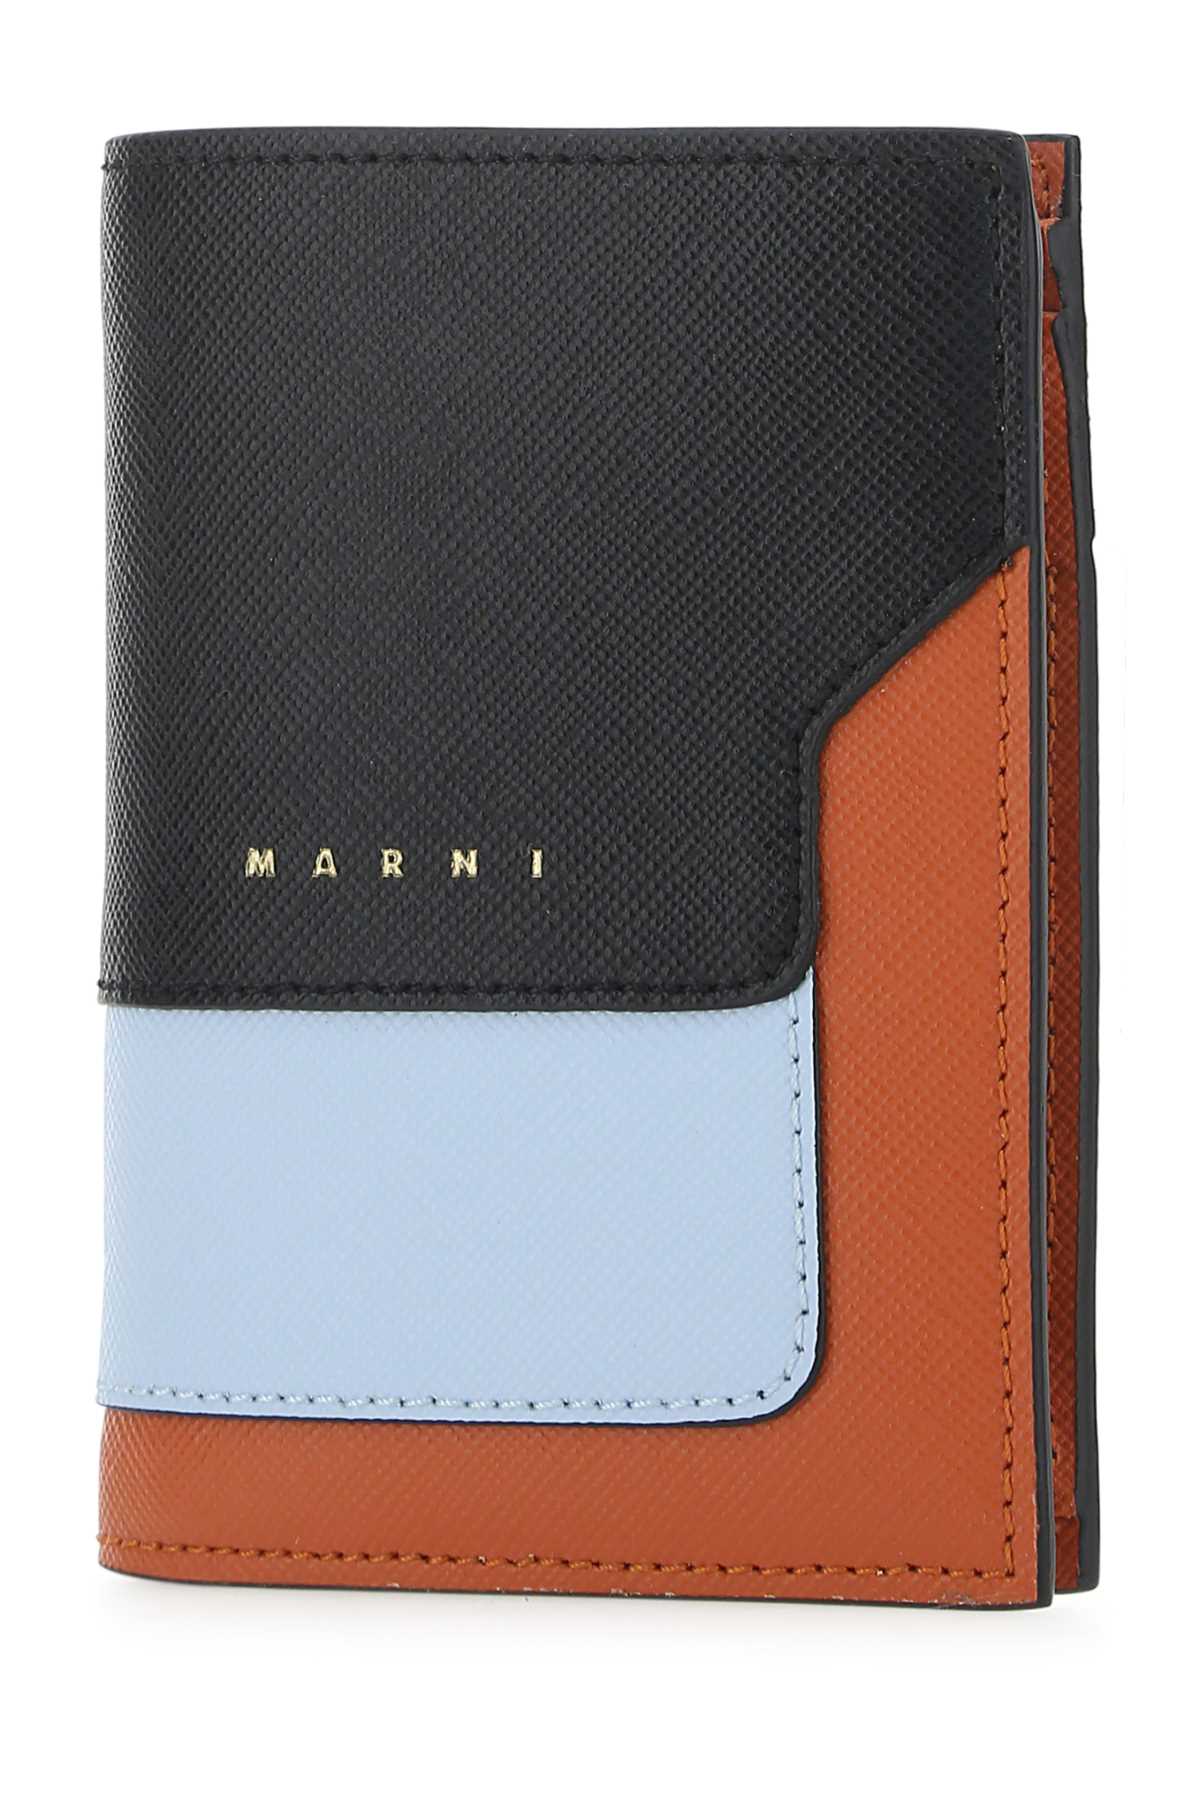 Shop Marni Multicolor Leather Wallet In Z586n